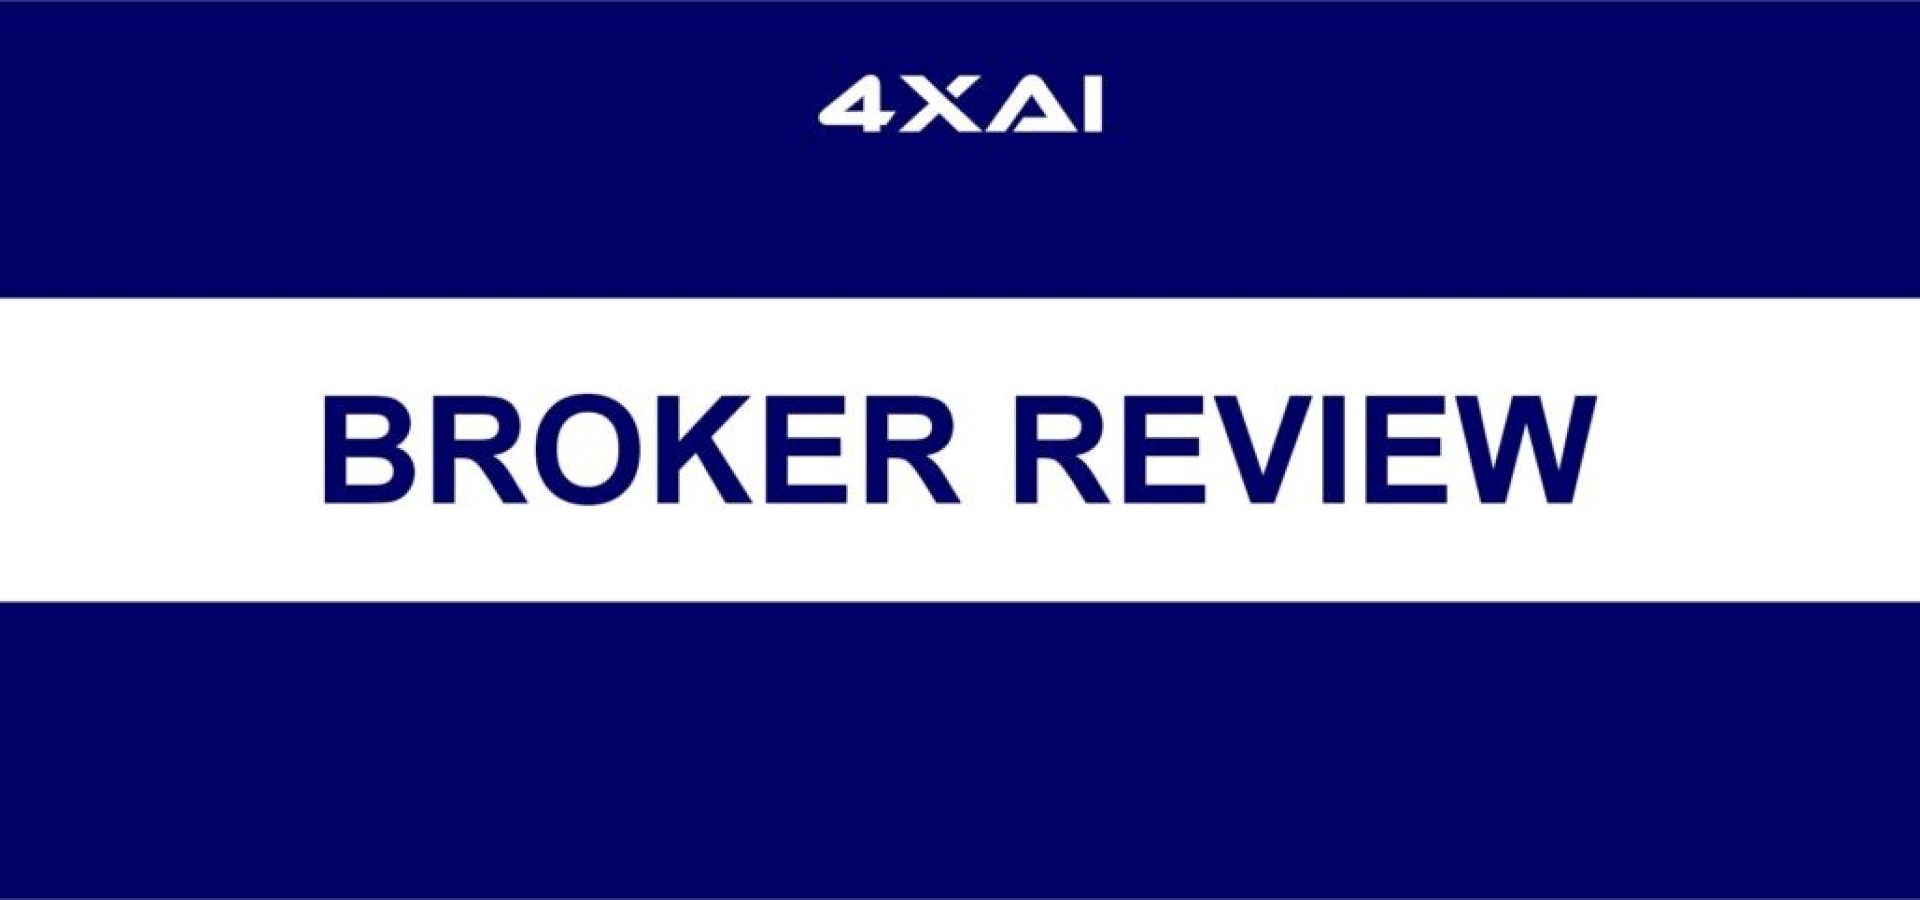 4xAi Review